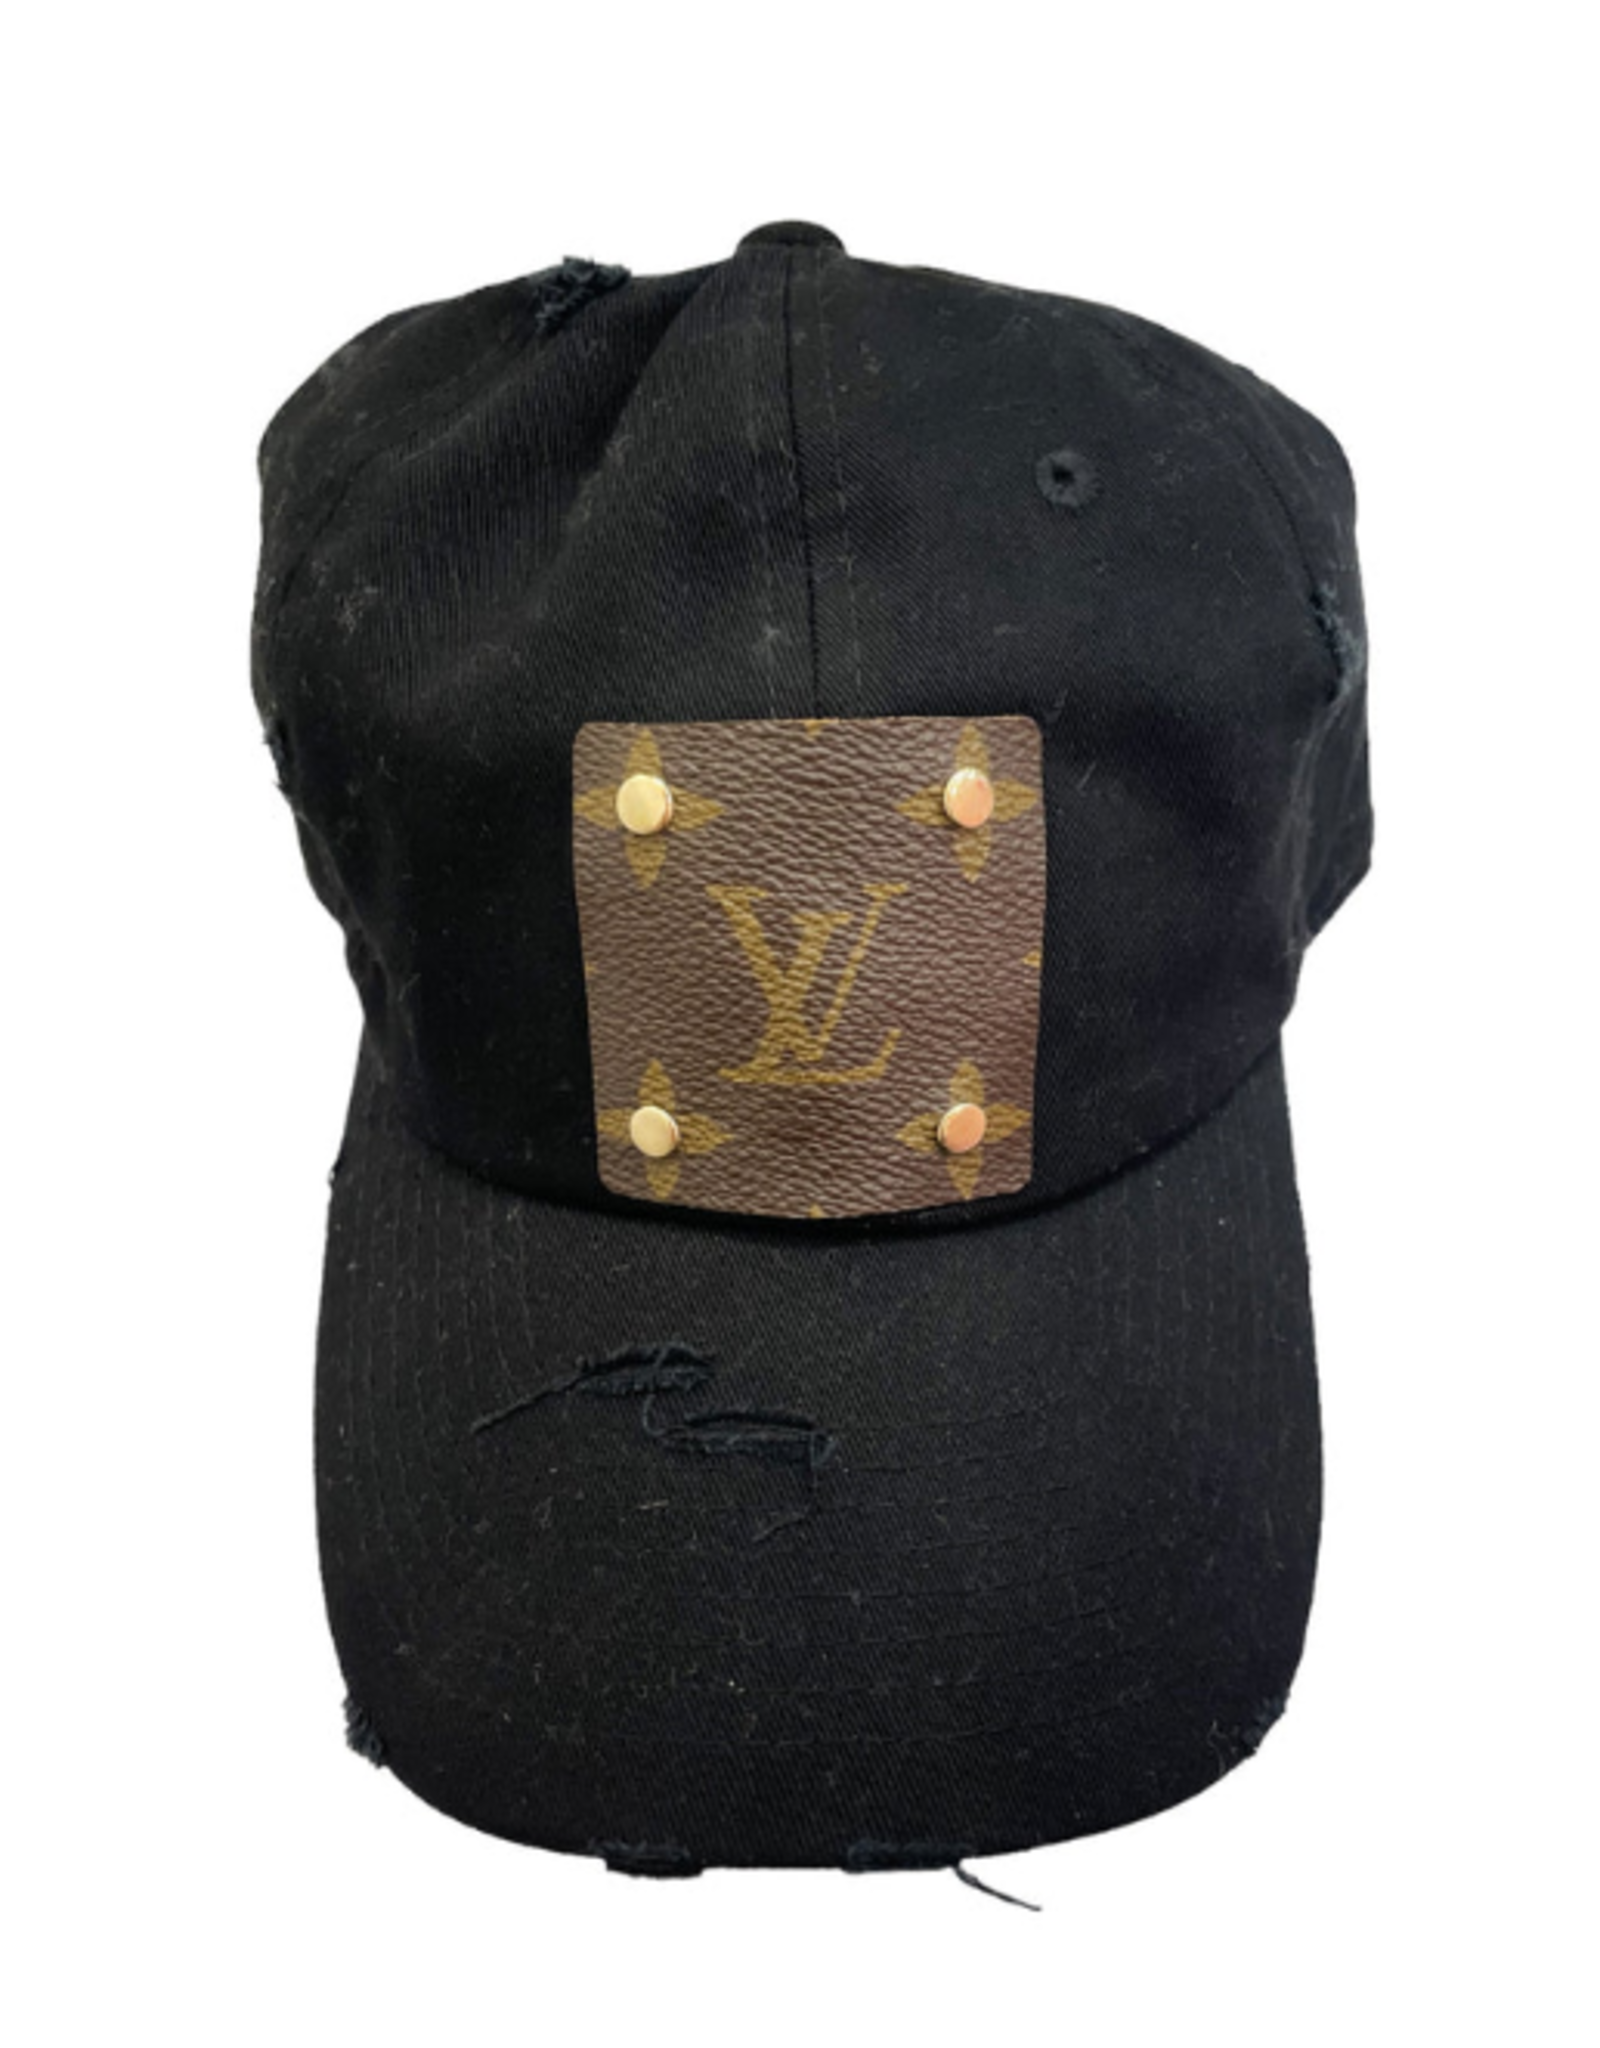 lv patch hat